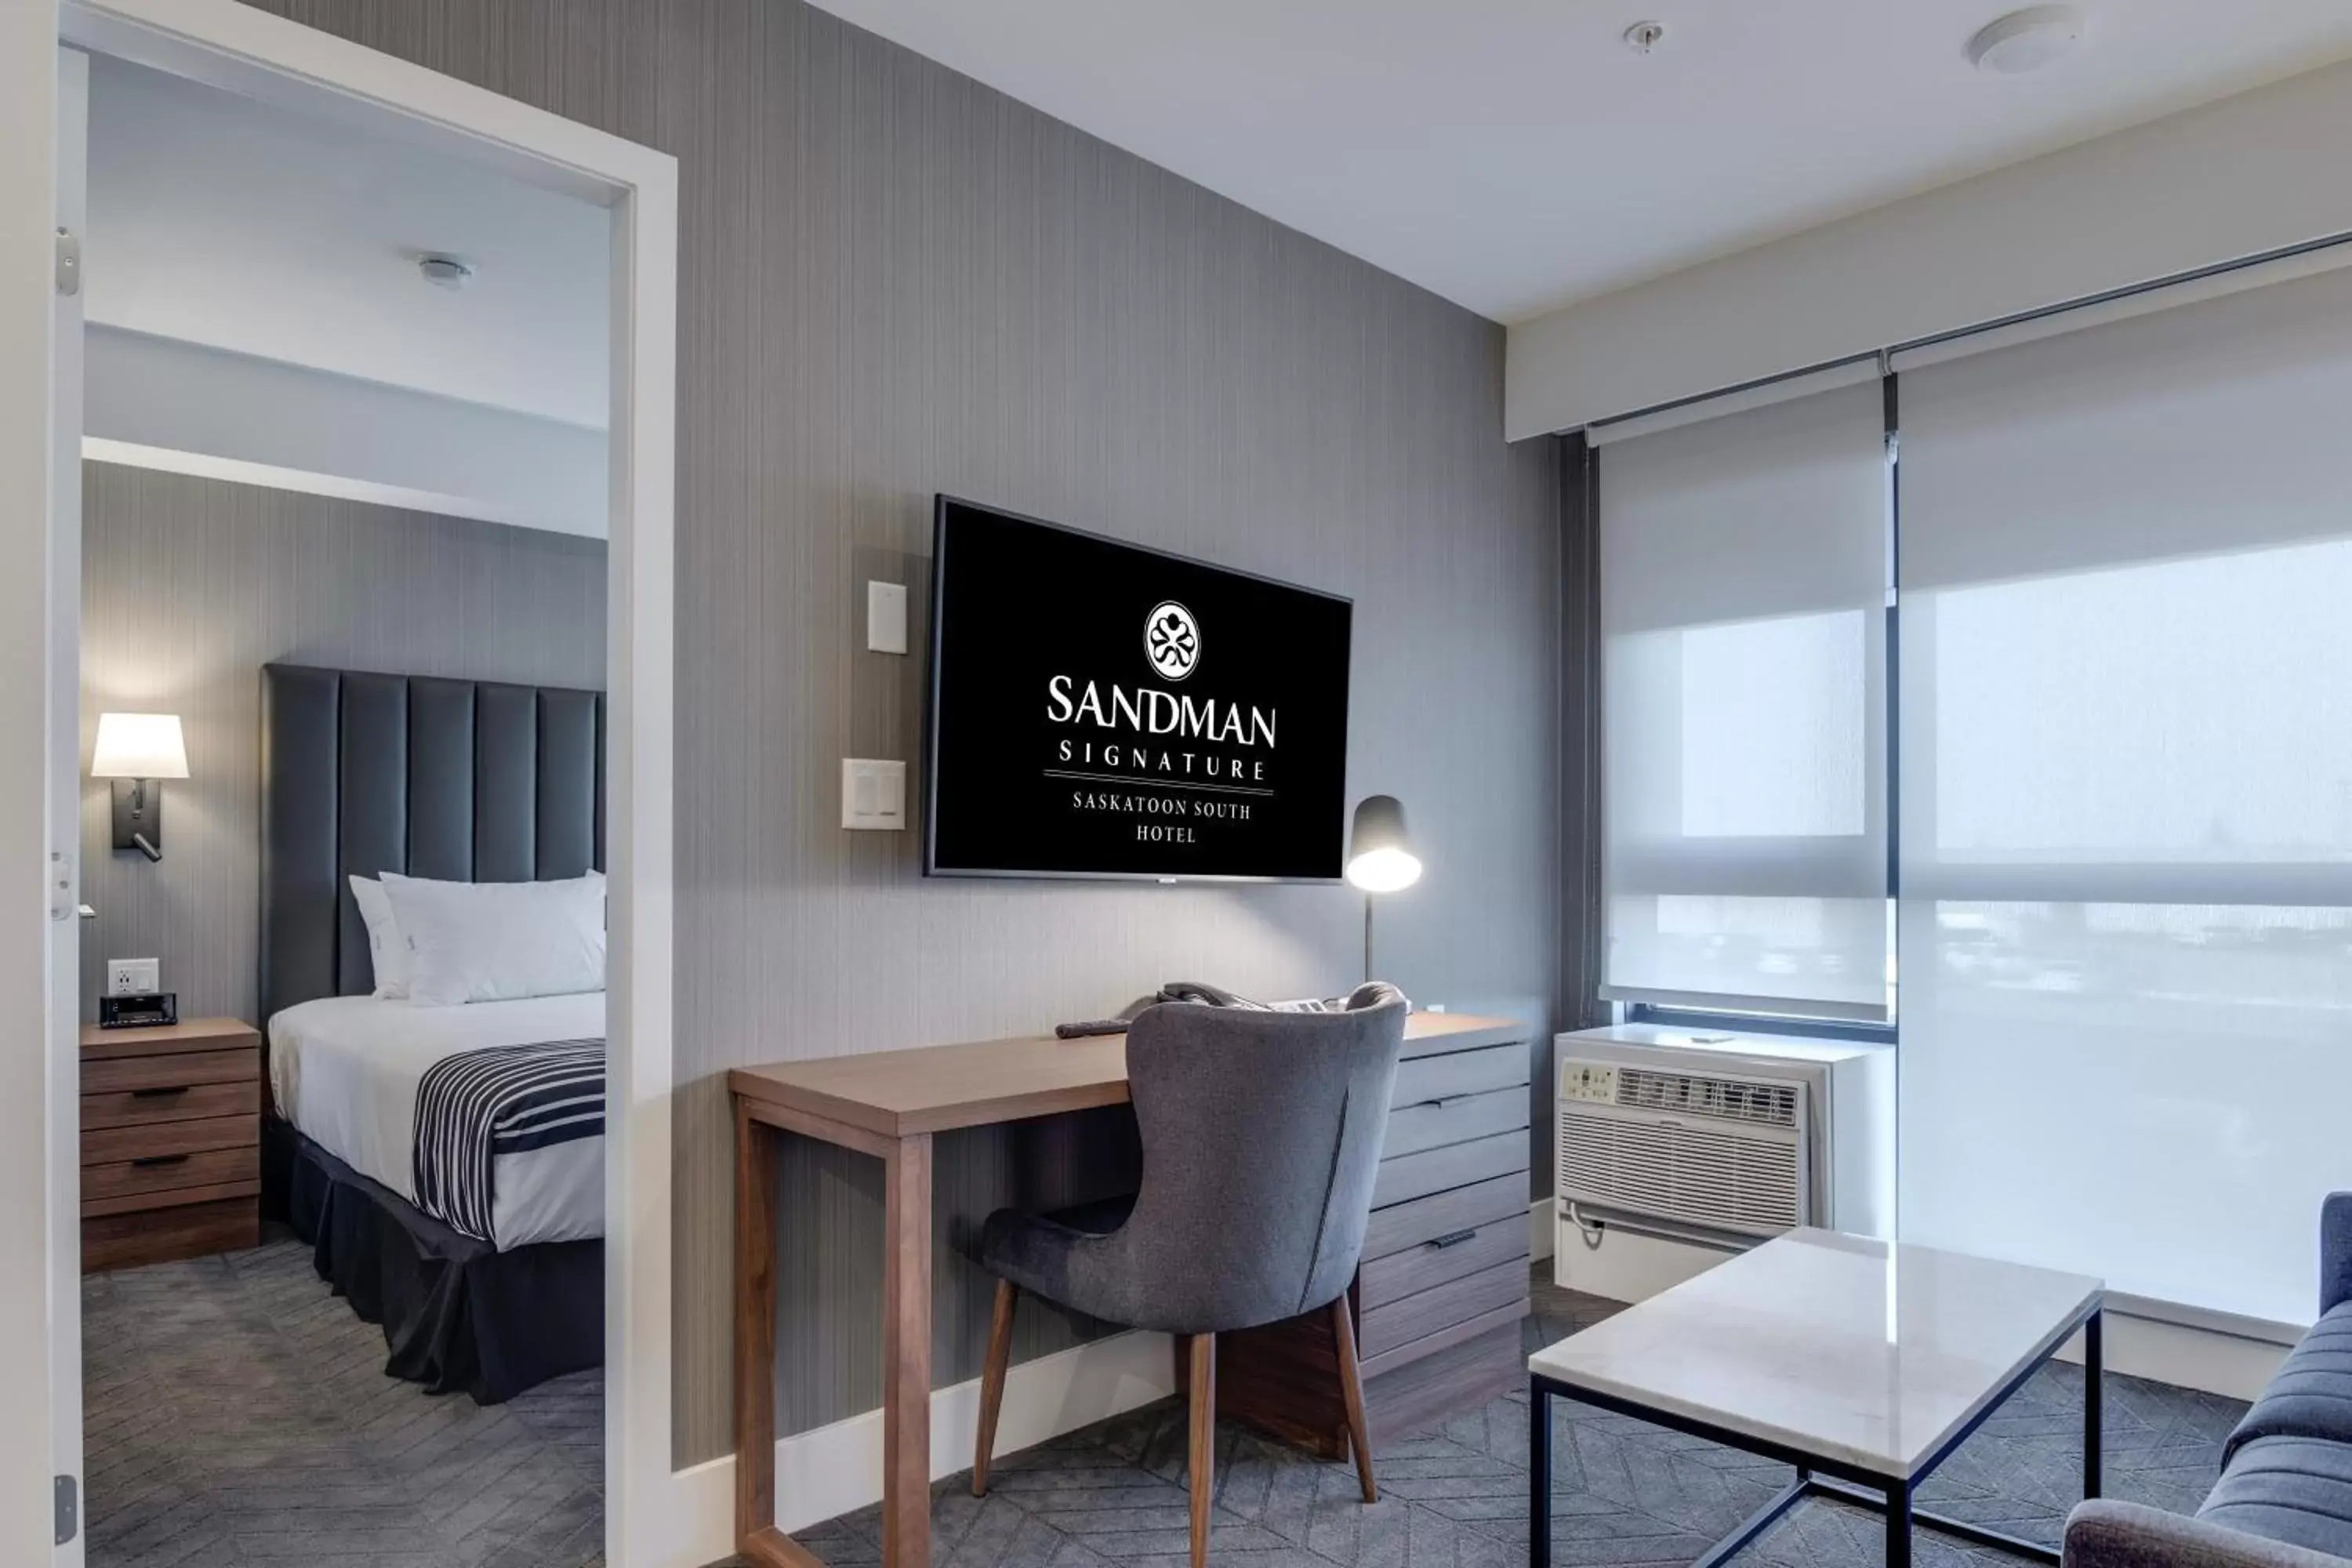 Photo of the whole room in Sandman Signature Saskatoon South Hotel